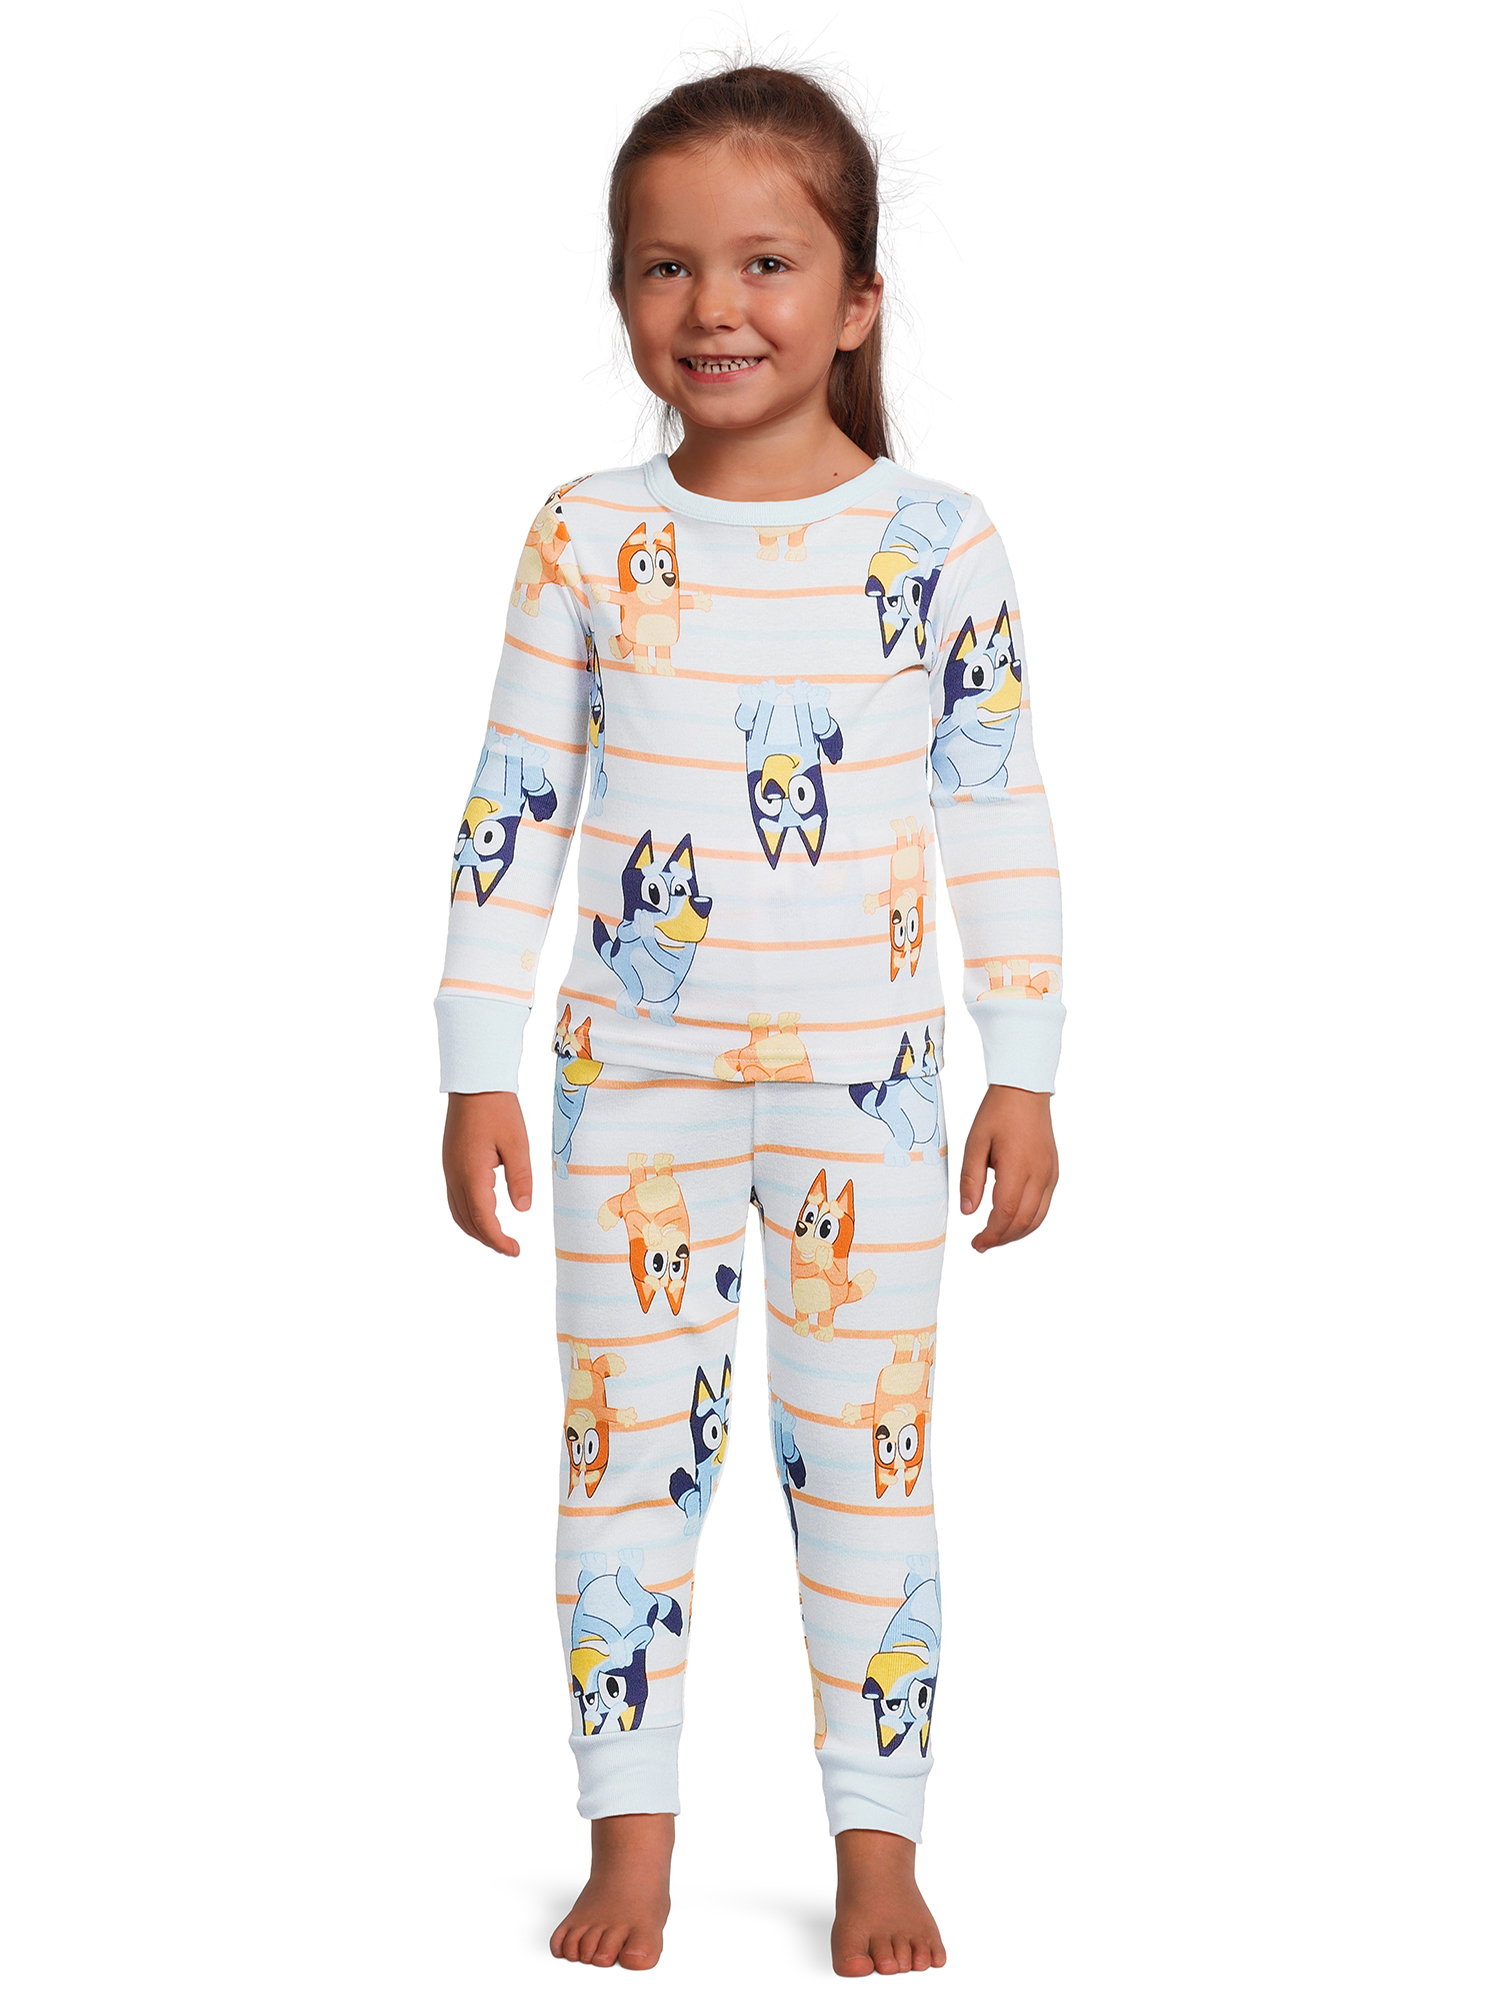 Bluey Toddler Unisex Long Sleeve Top and Pants, 2-Piece Pajama Set, Sizes 12M-5T - image 5 of 9